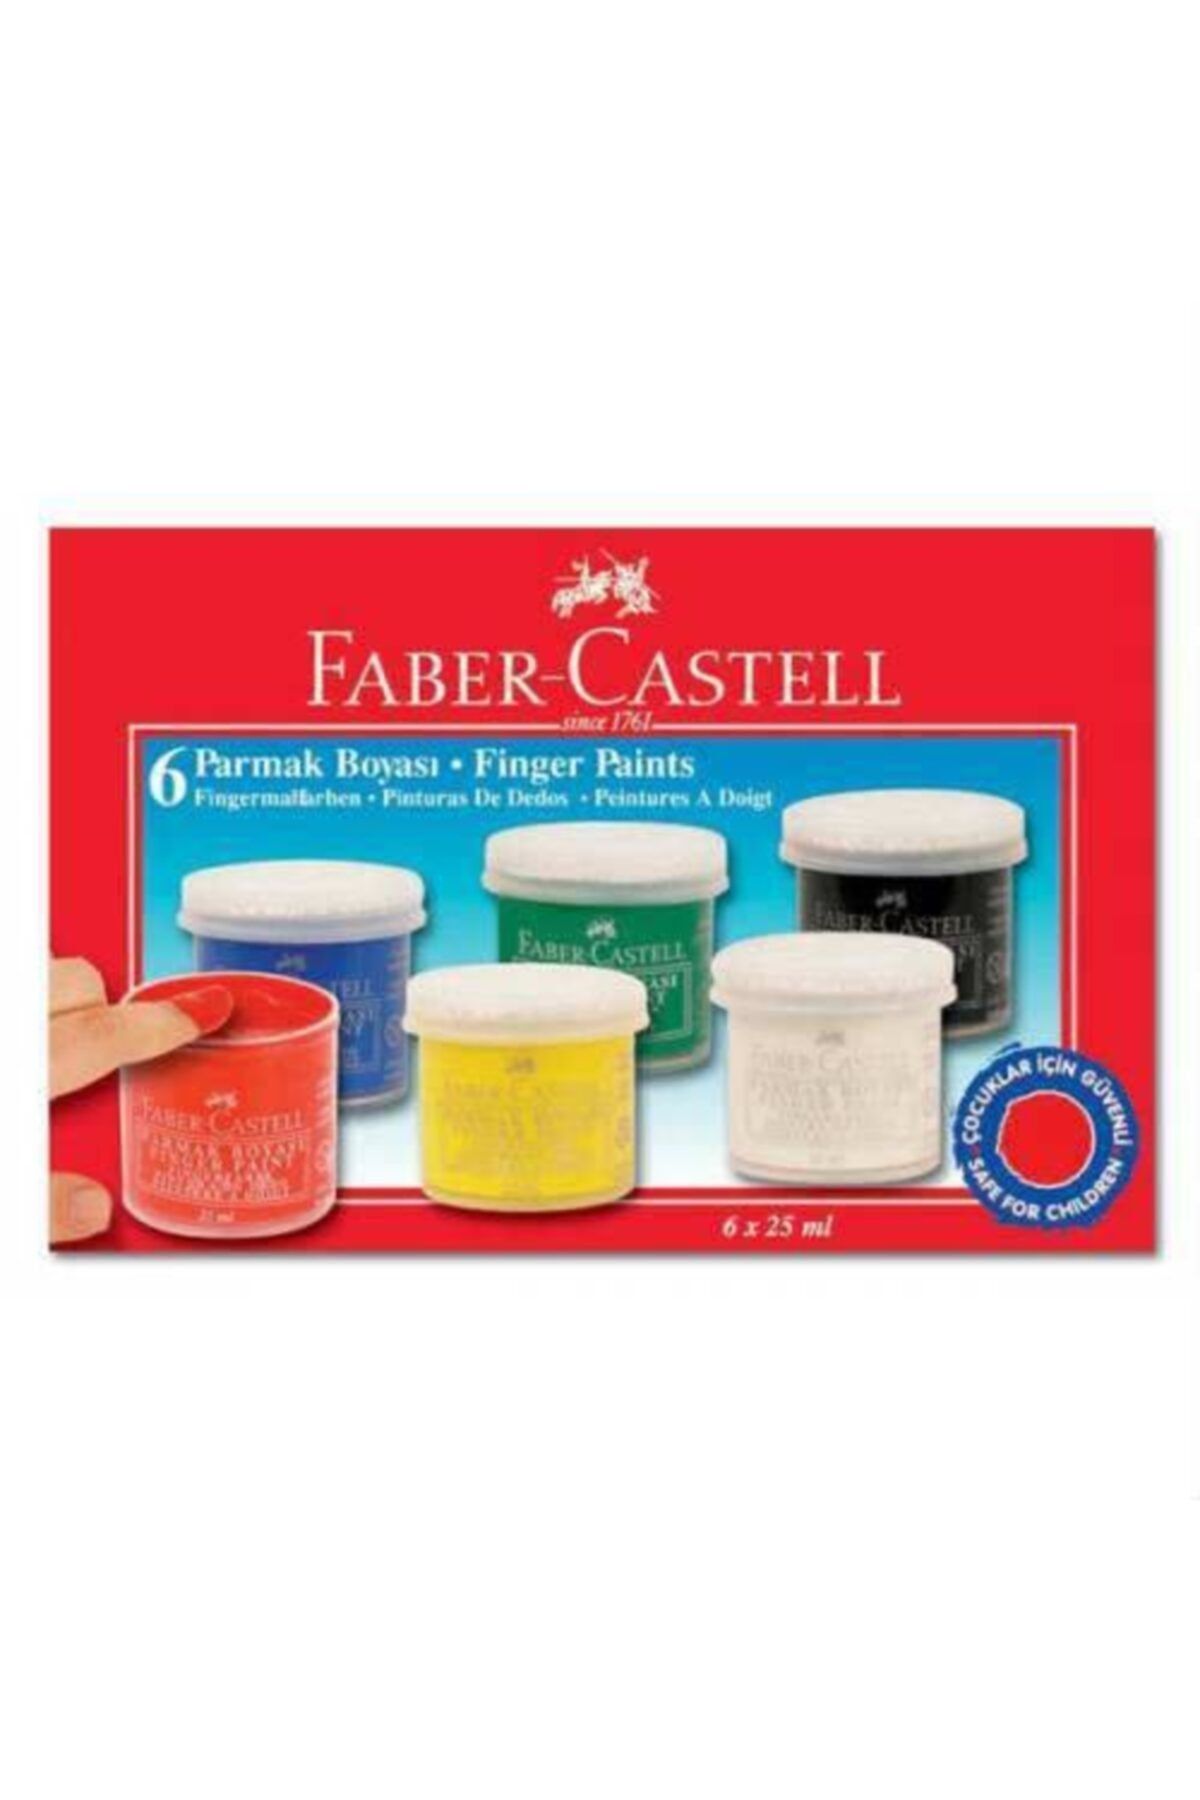 Faber Castell Parmak Boyası 25 ml 6 Renk